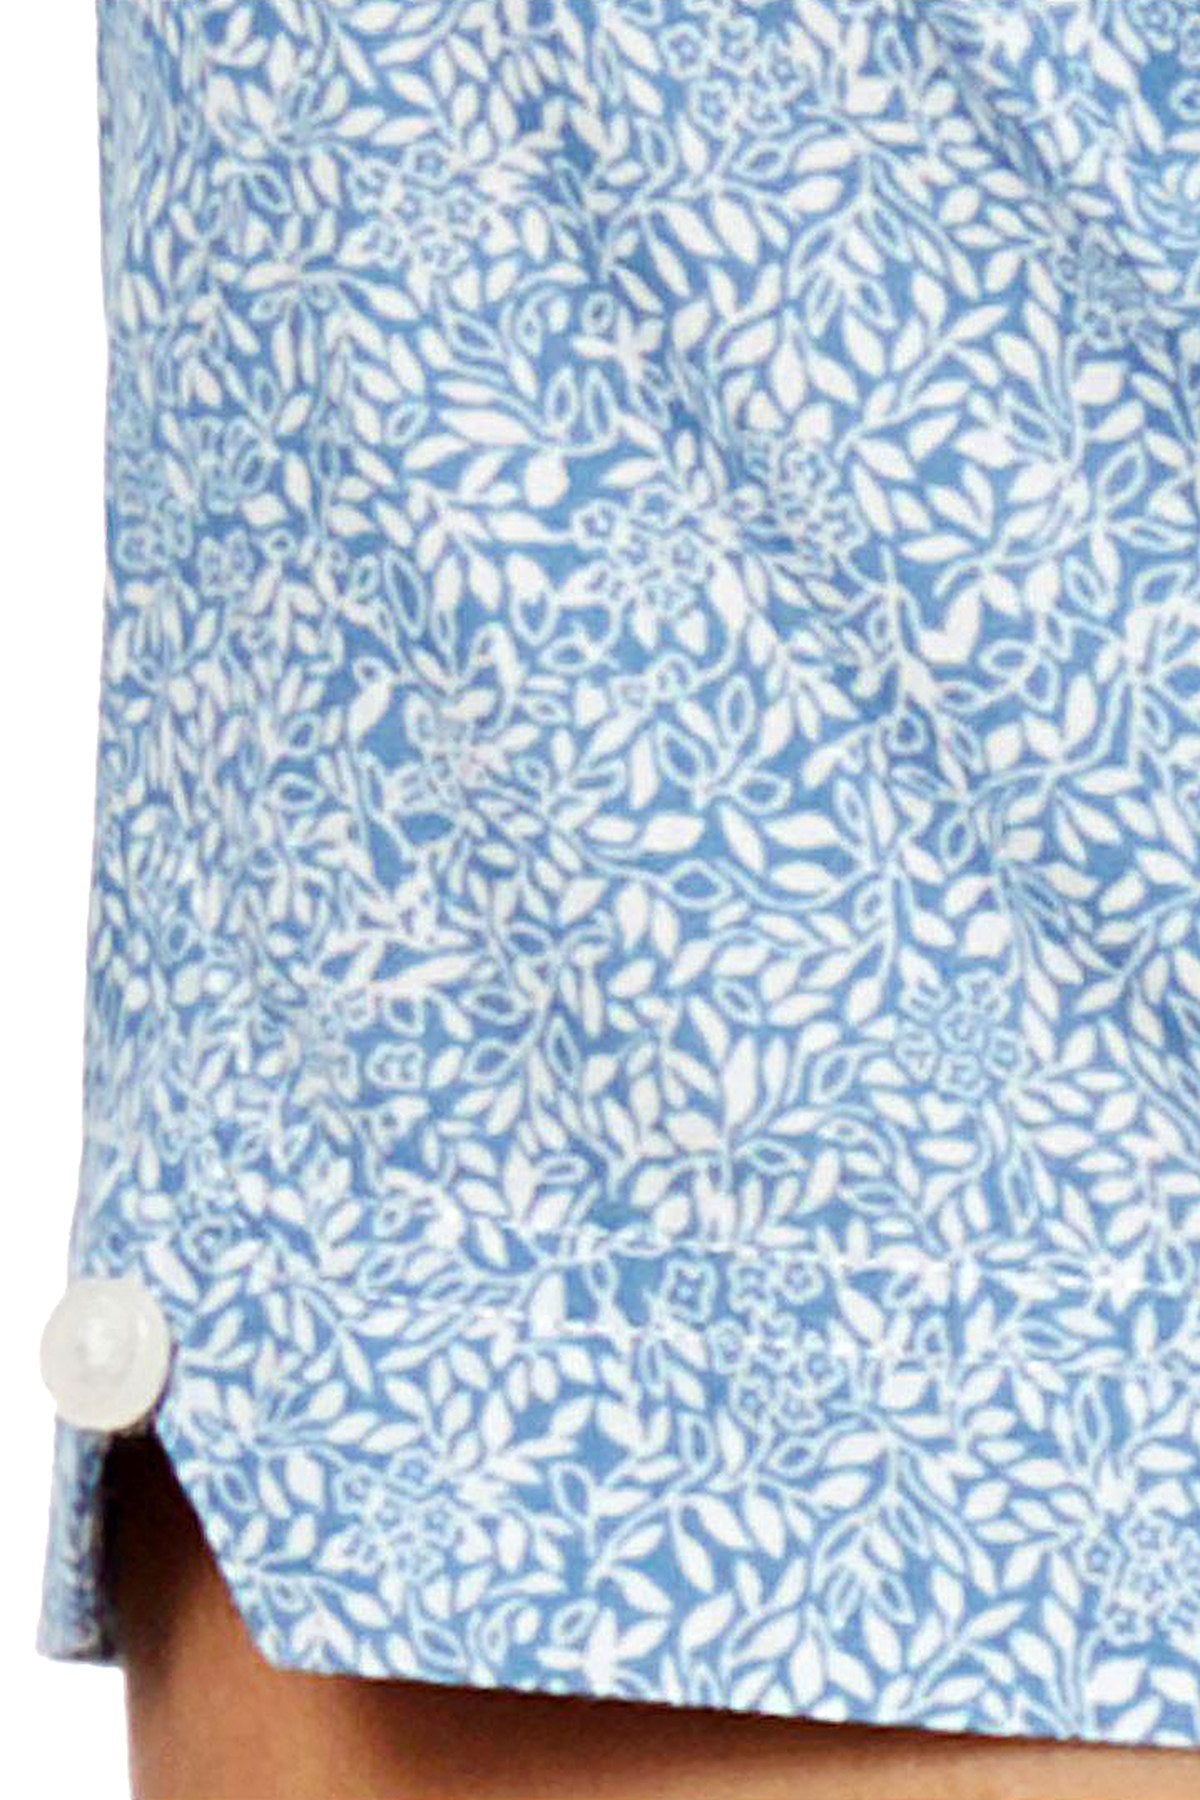 Ben Sherman Blue Summer-Sky Floral Printed Slim-Fit Button-Down Shirt